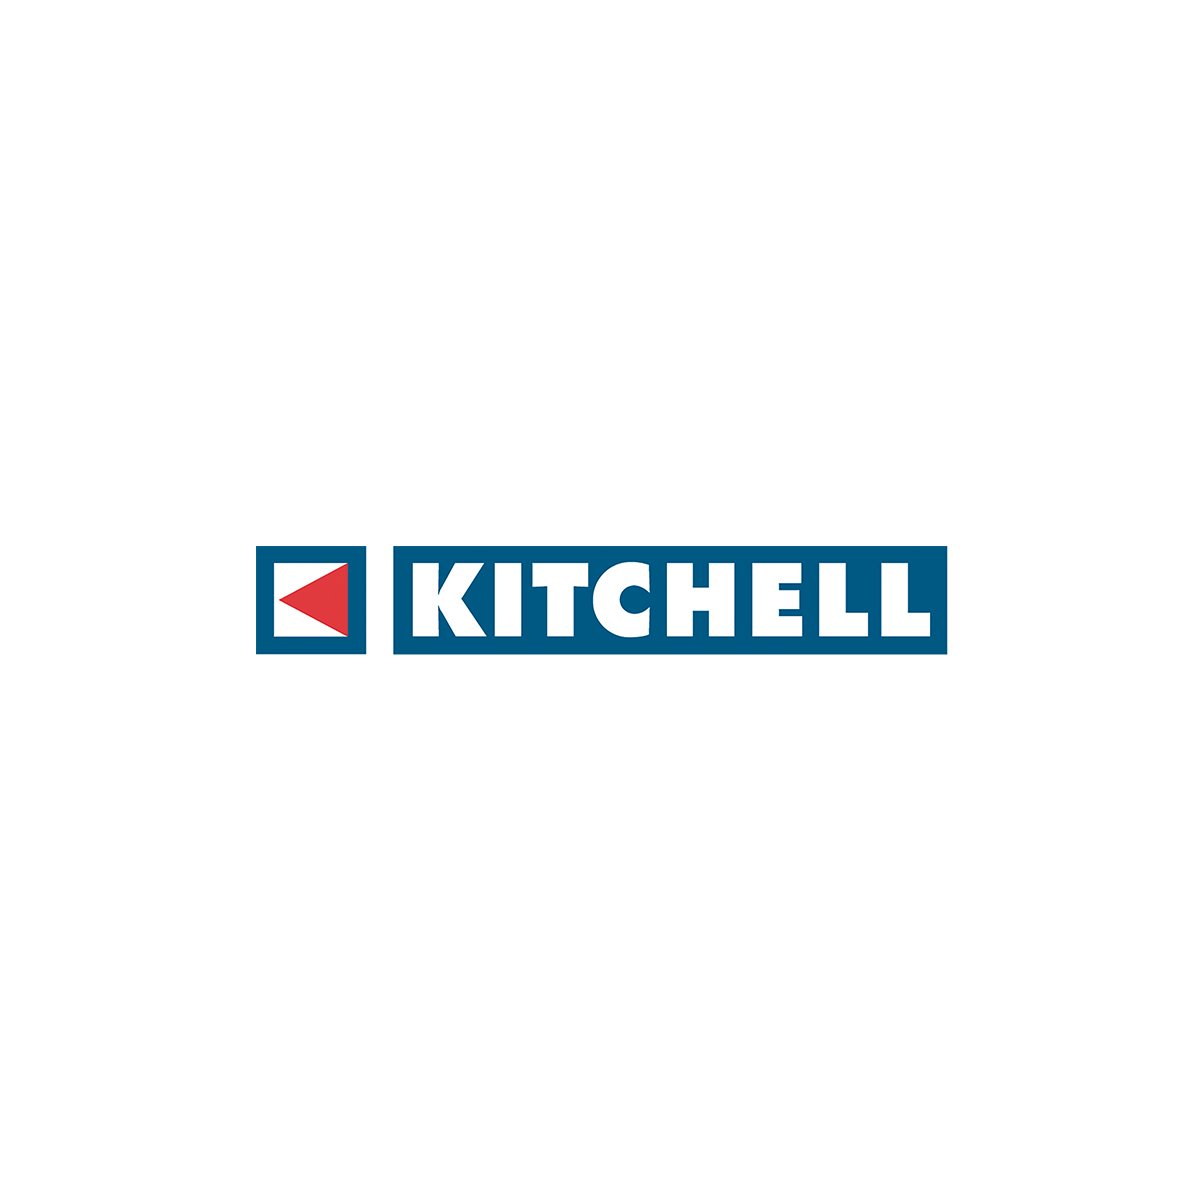 Kitchell logo.jpg